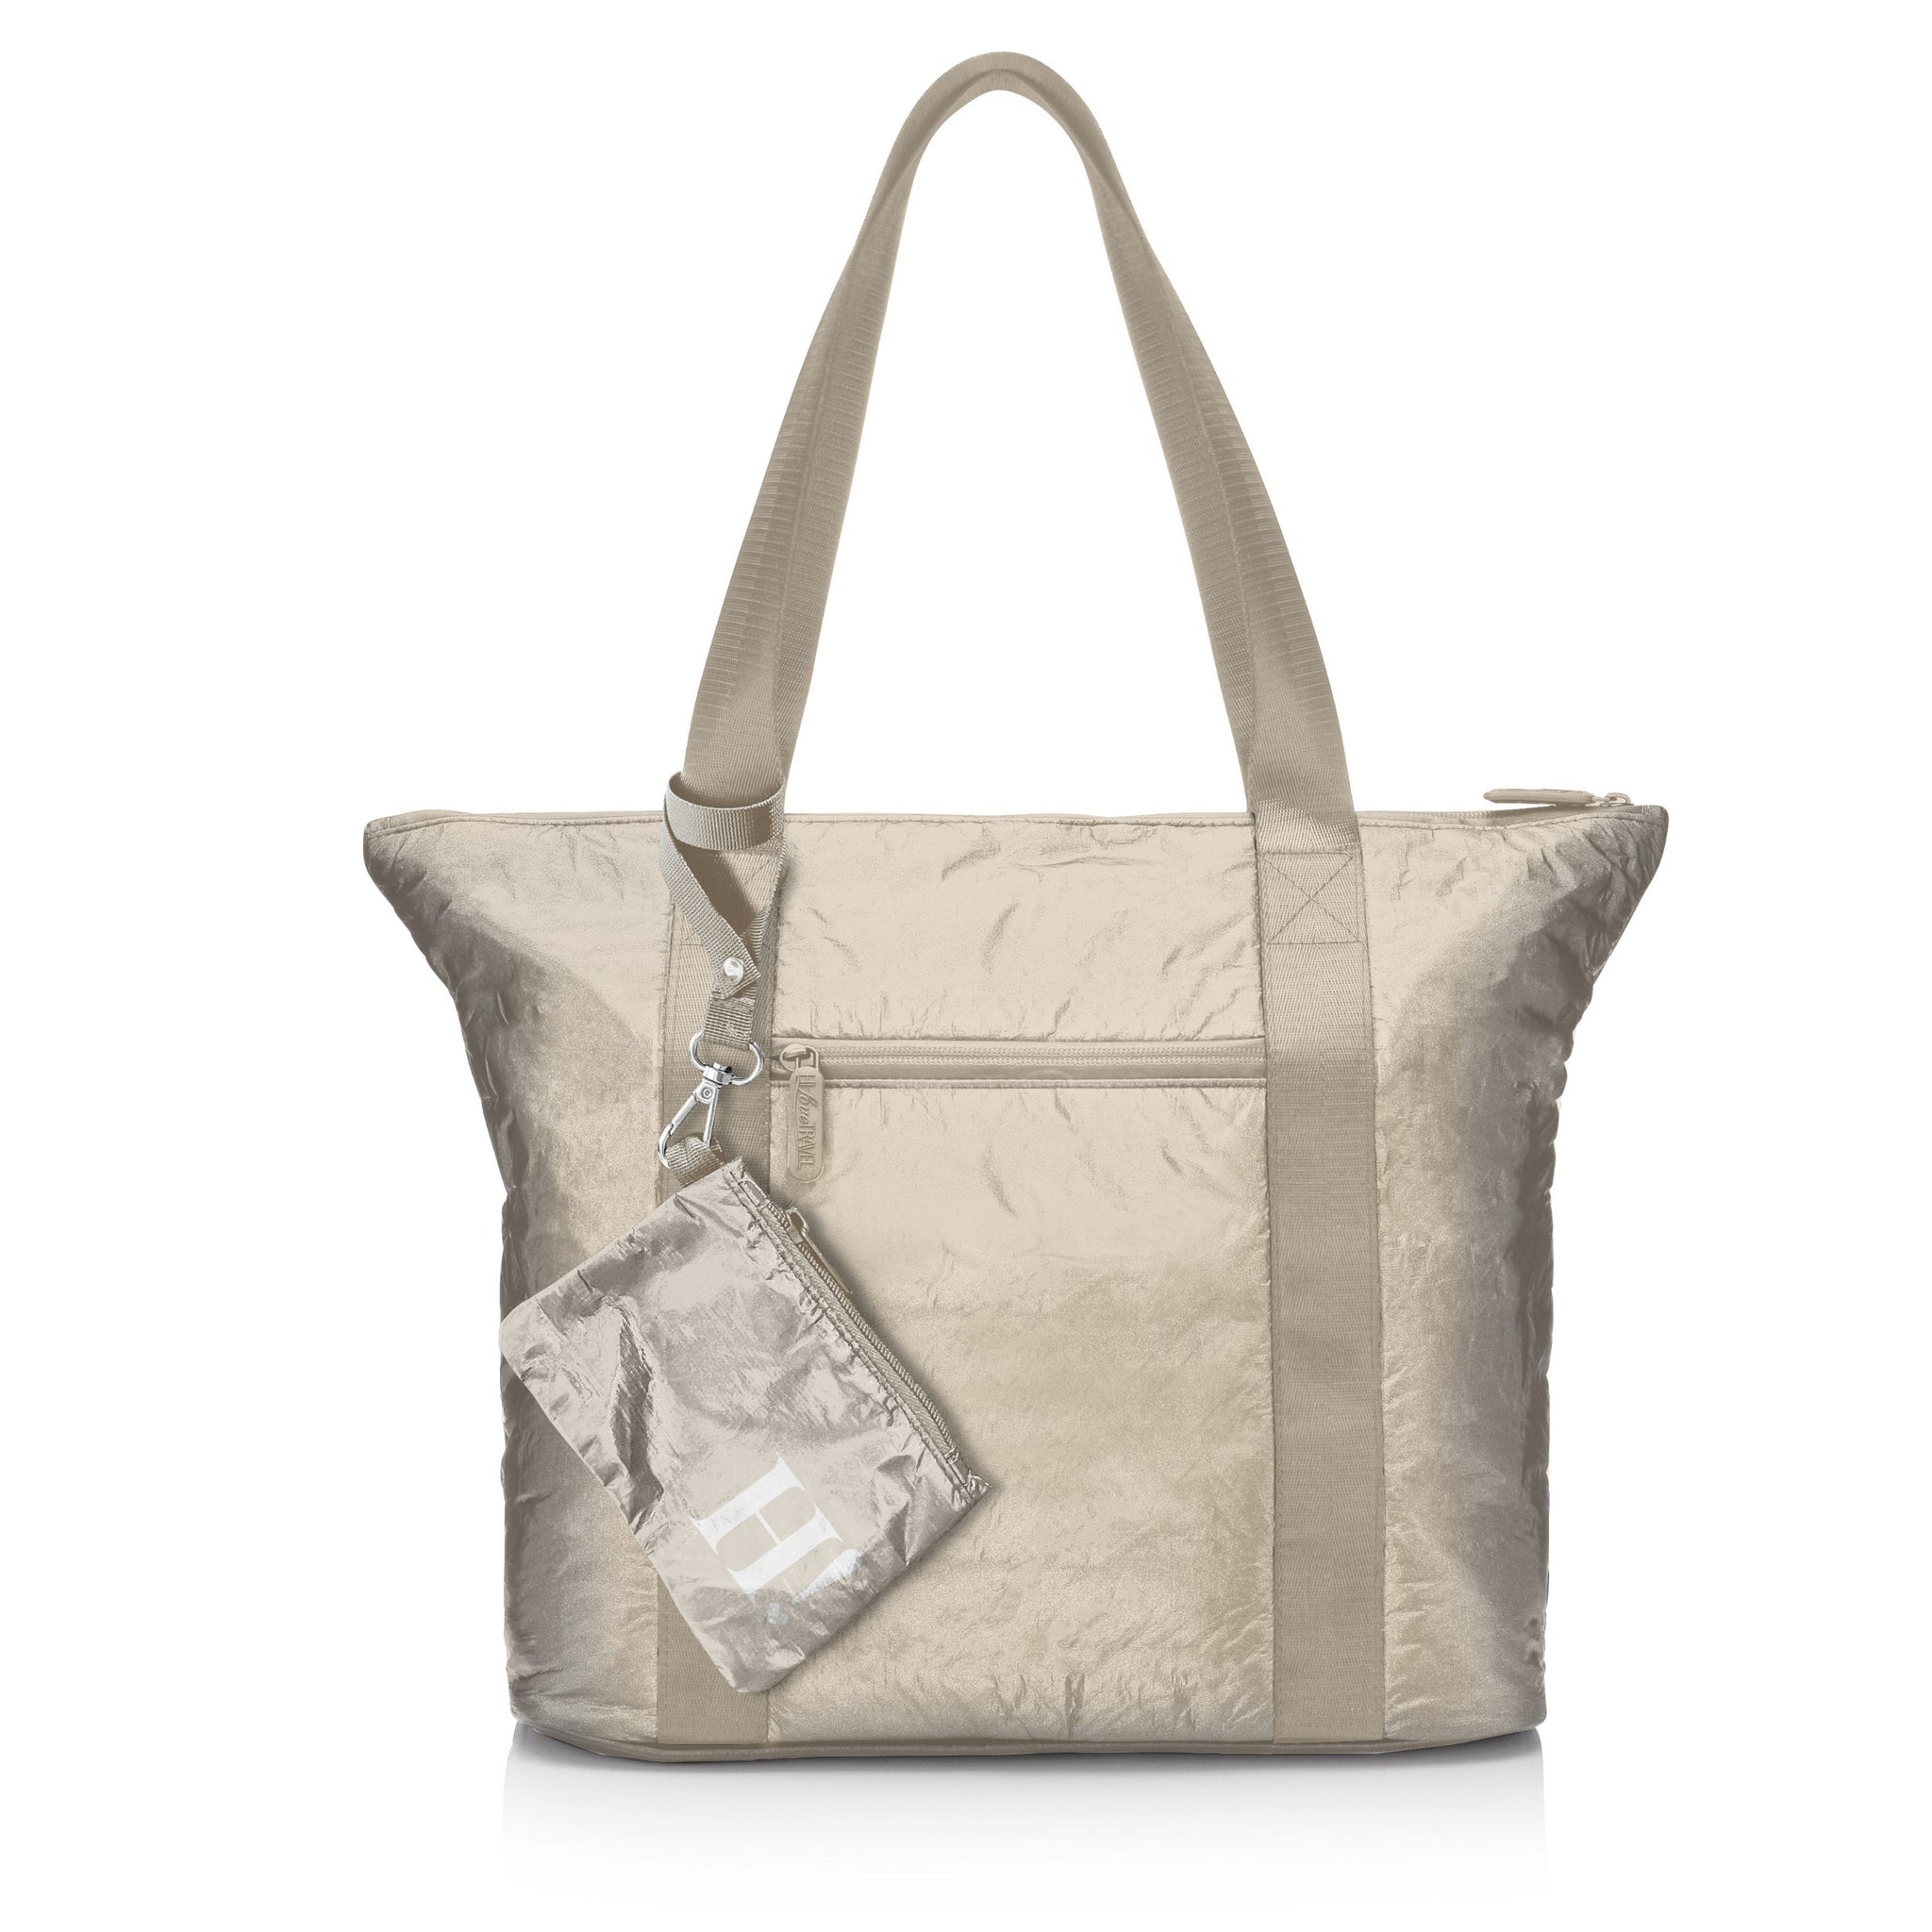 Unpadded Tote Bag with Zipper Pockets in Shimmer Golden Beige